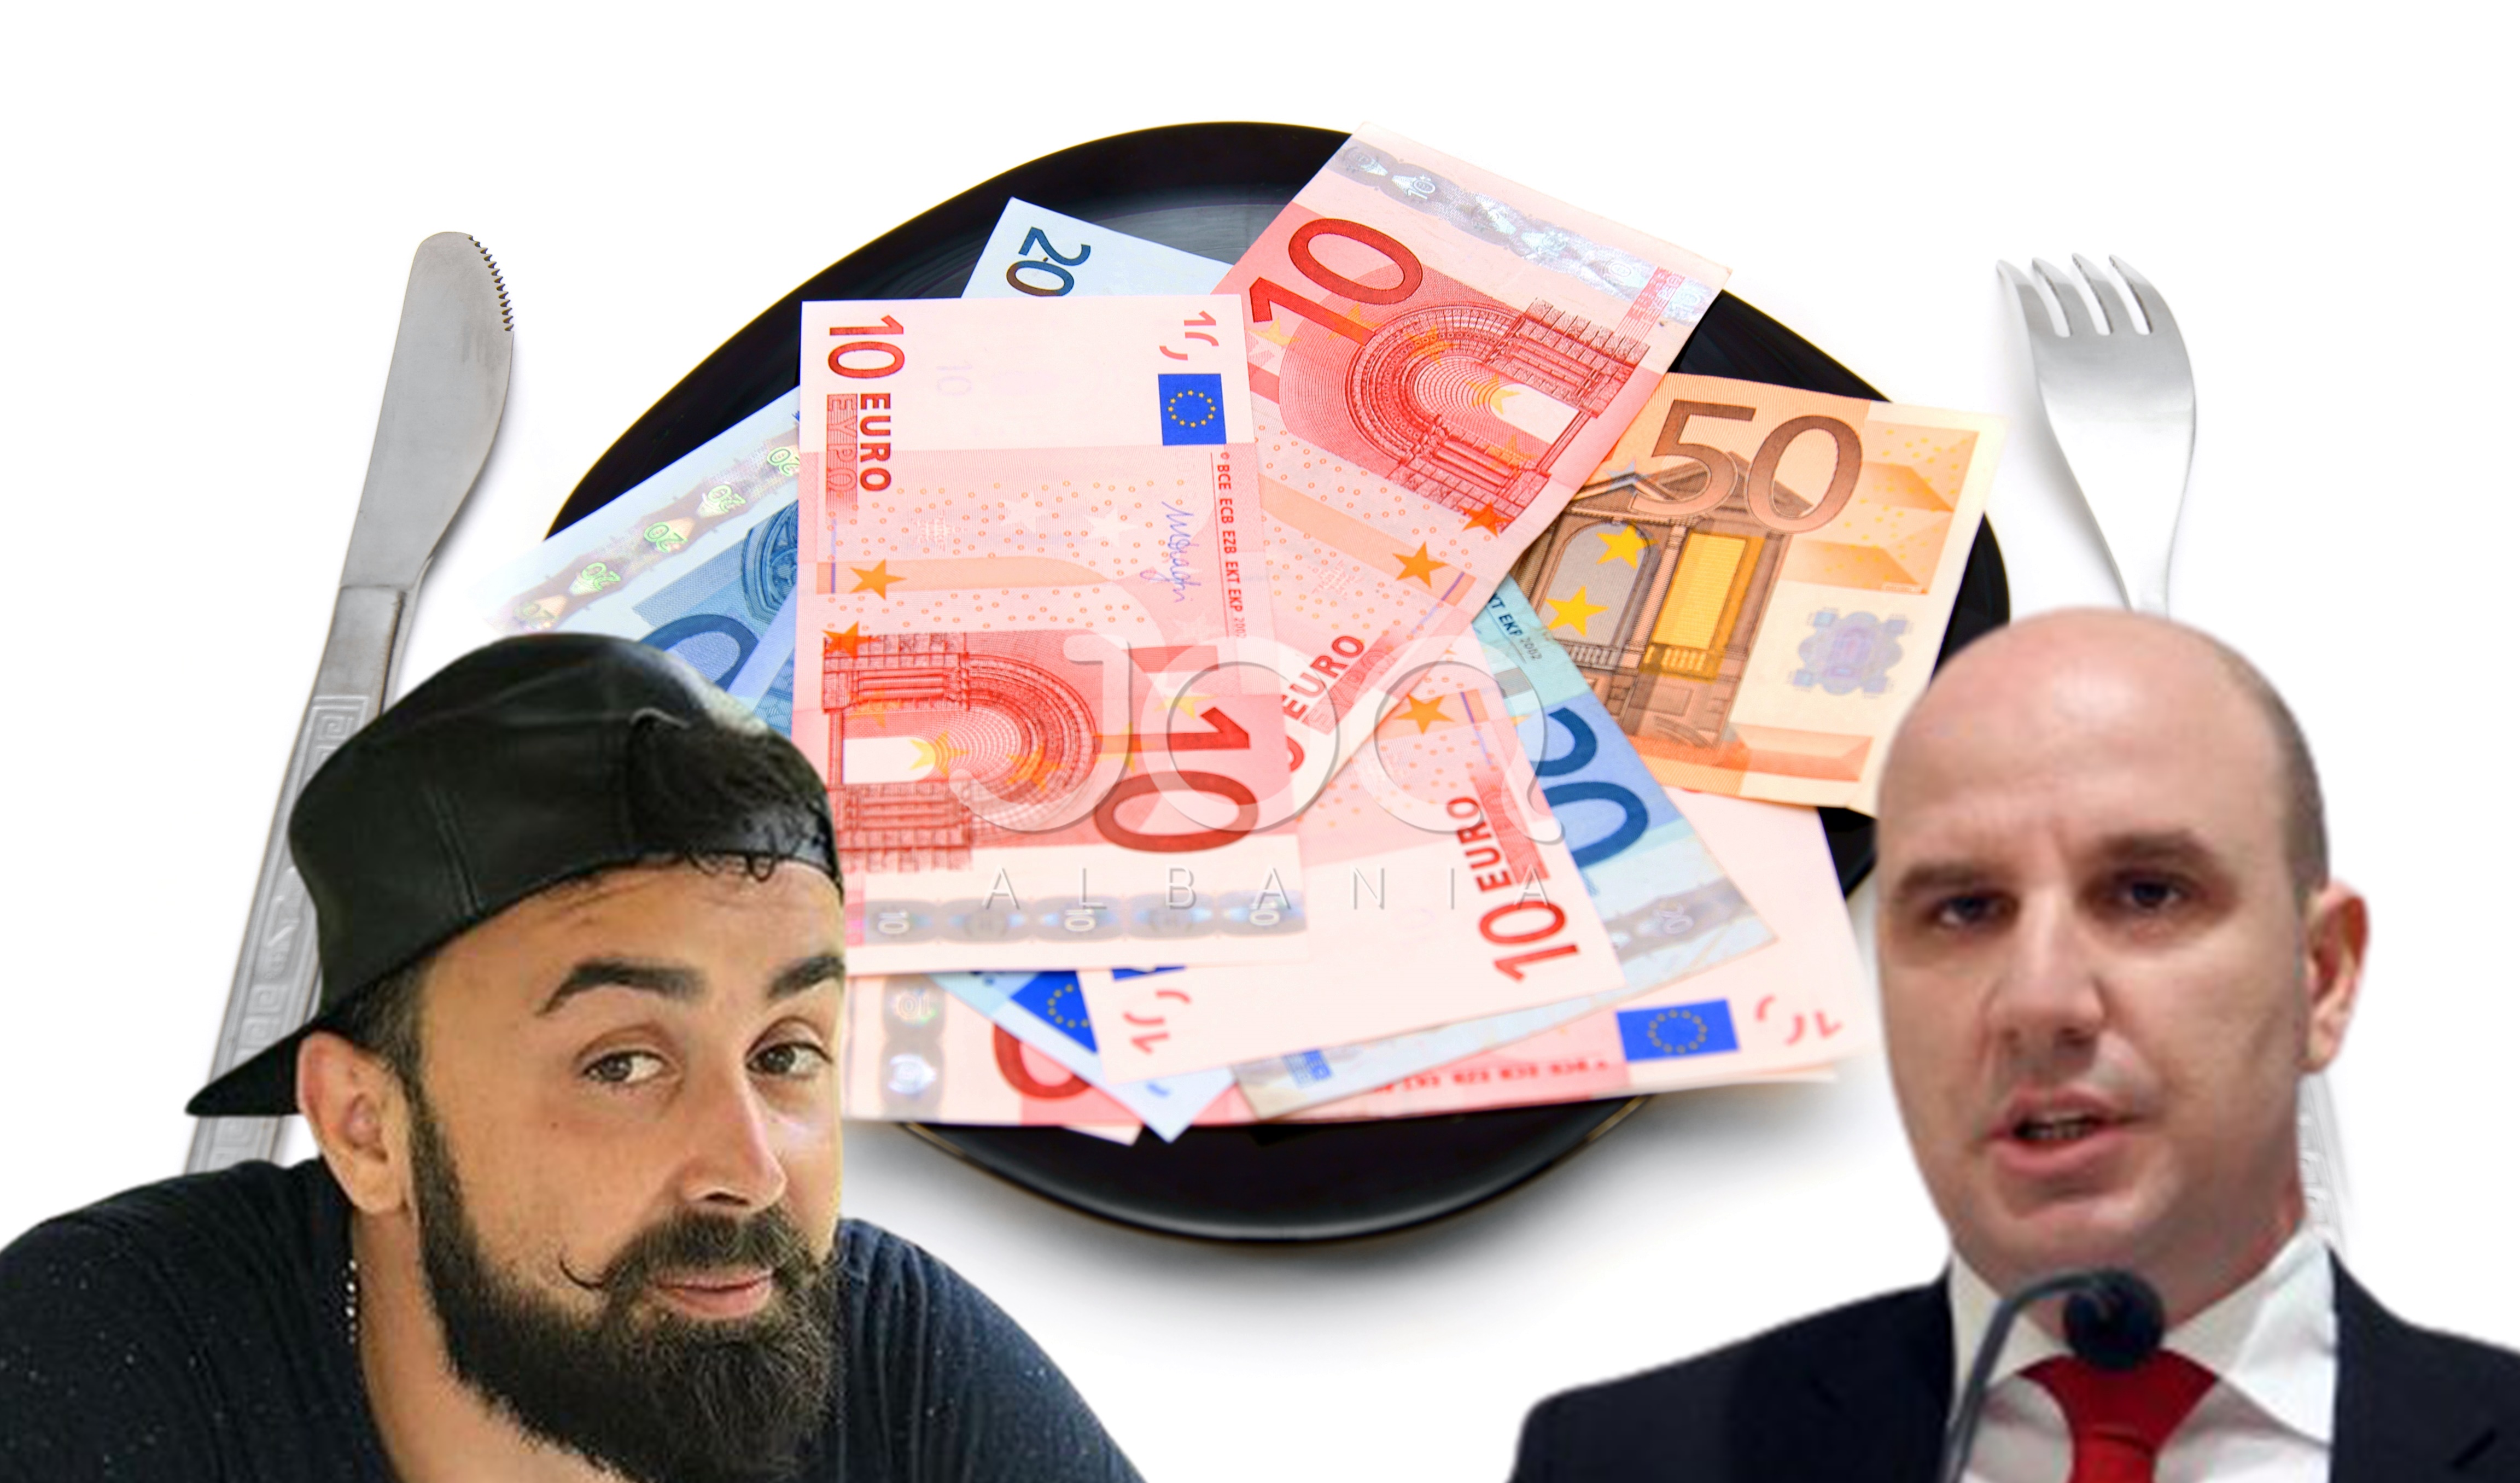 Dritan Agolli “donates” 500 million ALL to chef Alfio, to show him what Albanians eat